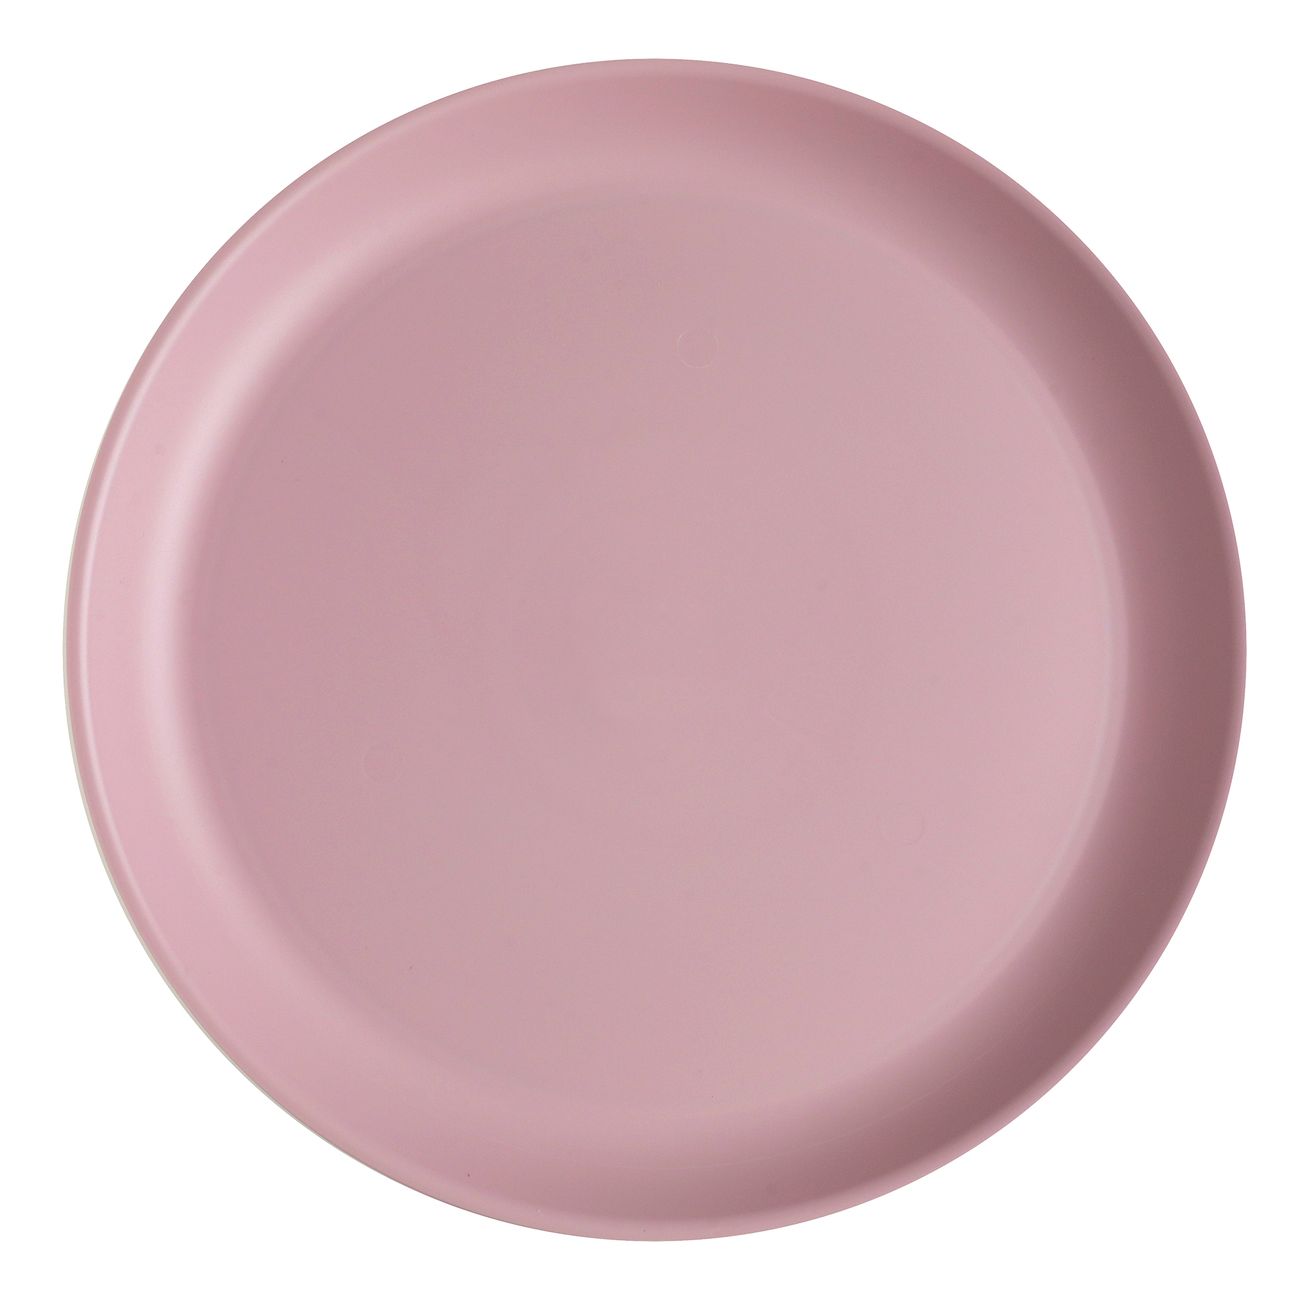 tallrik-plast-pastell-rosa-96638-1